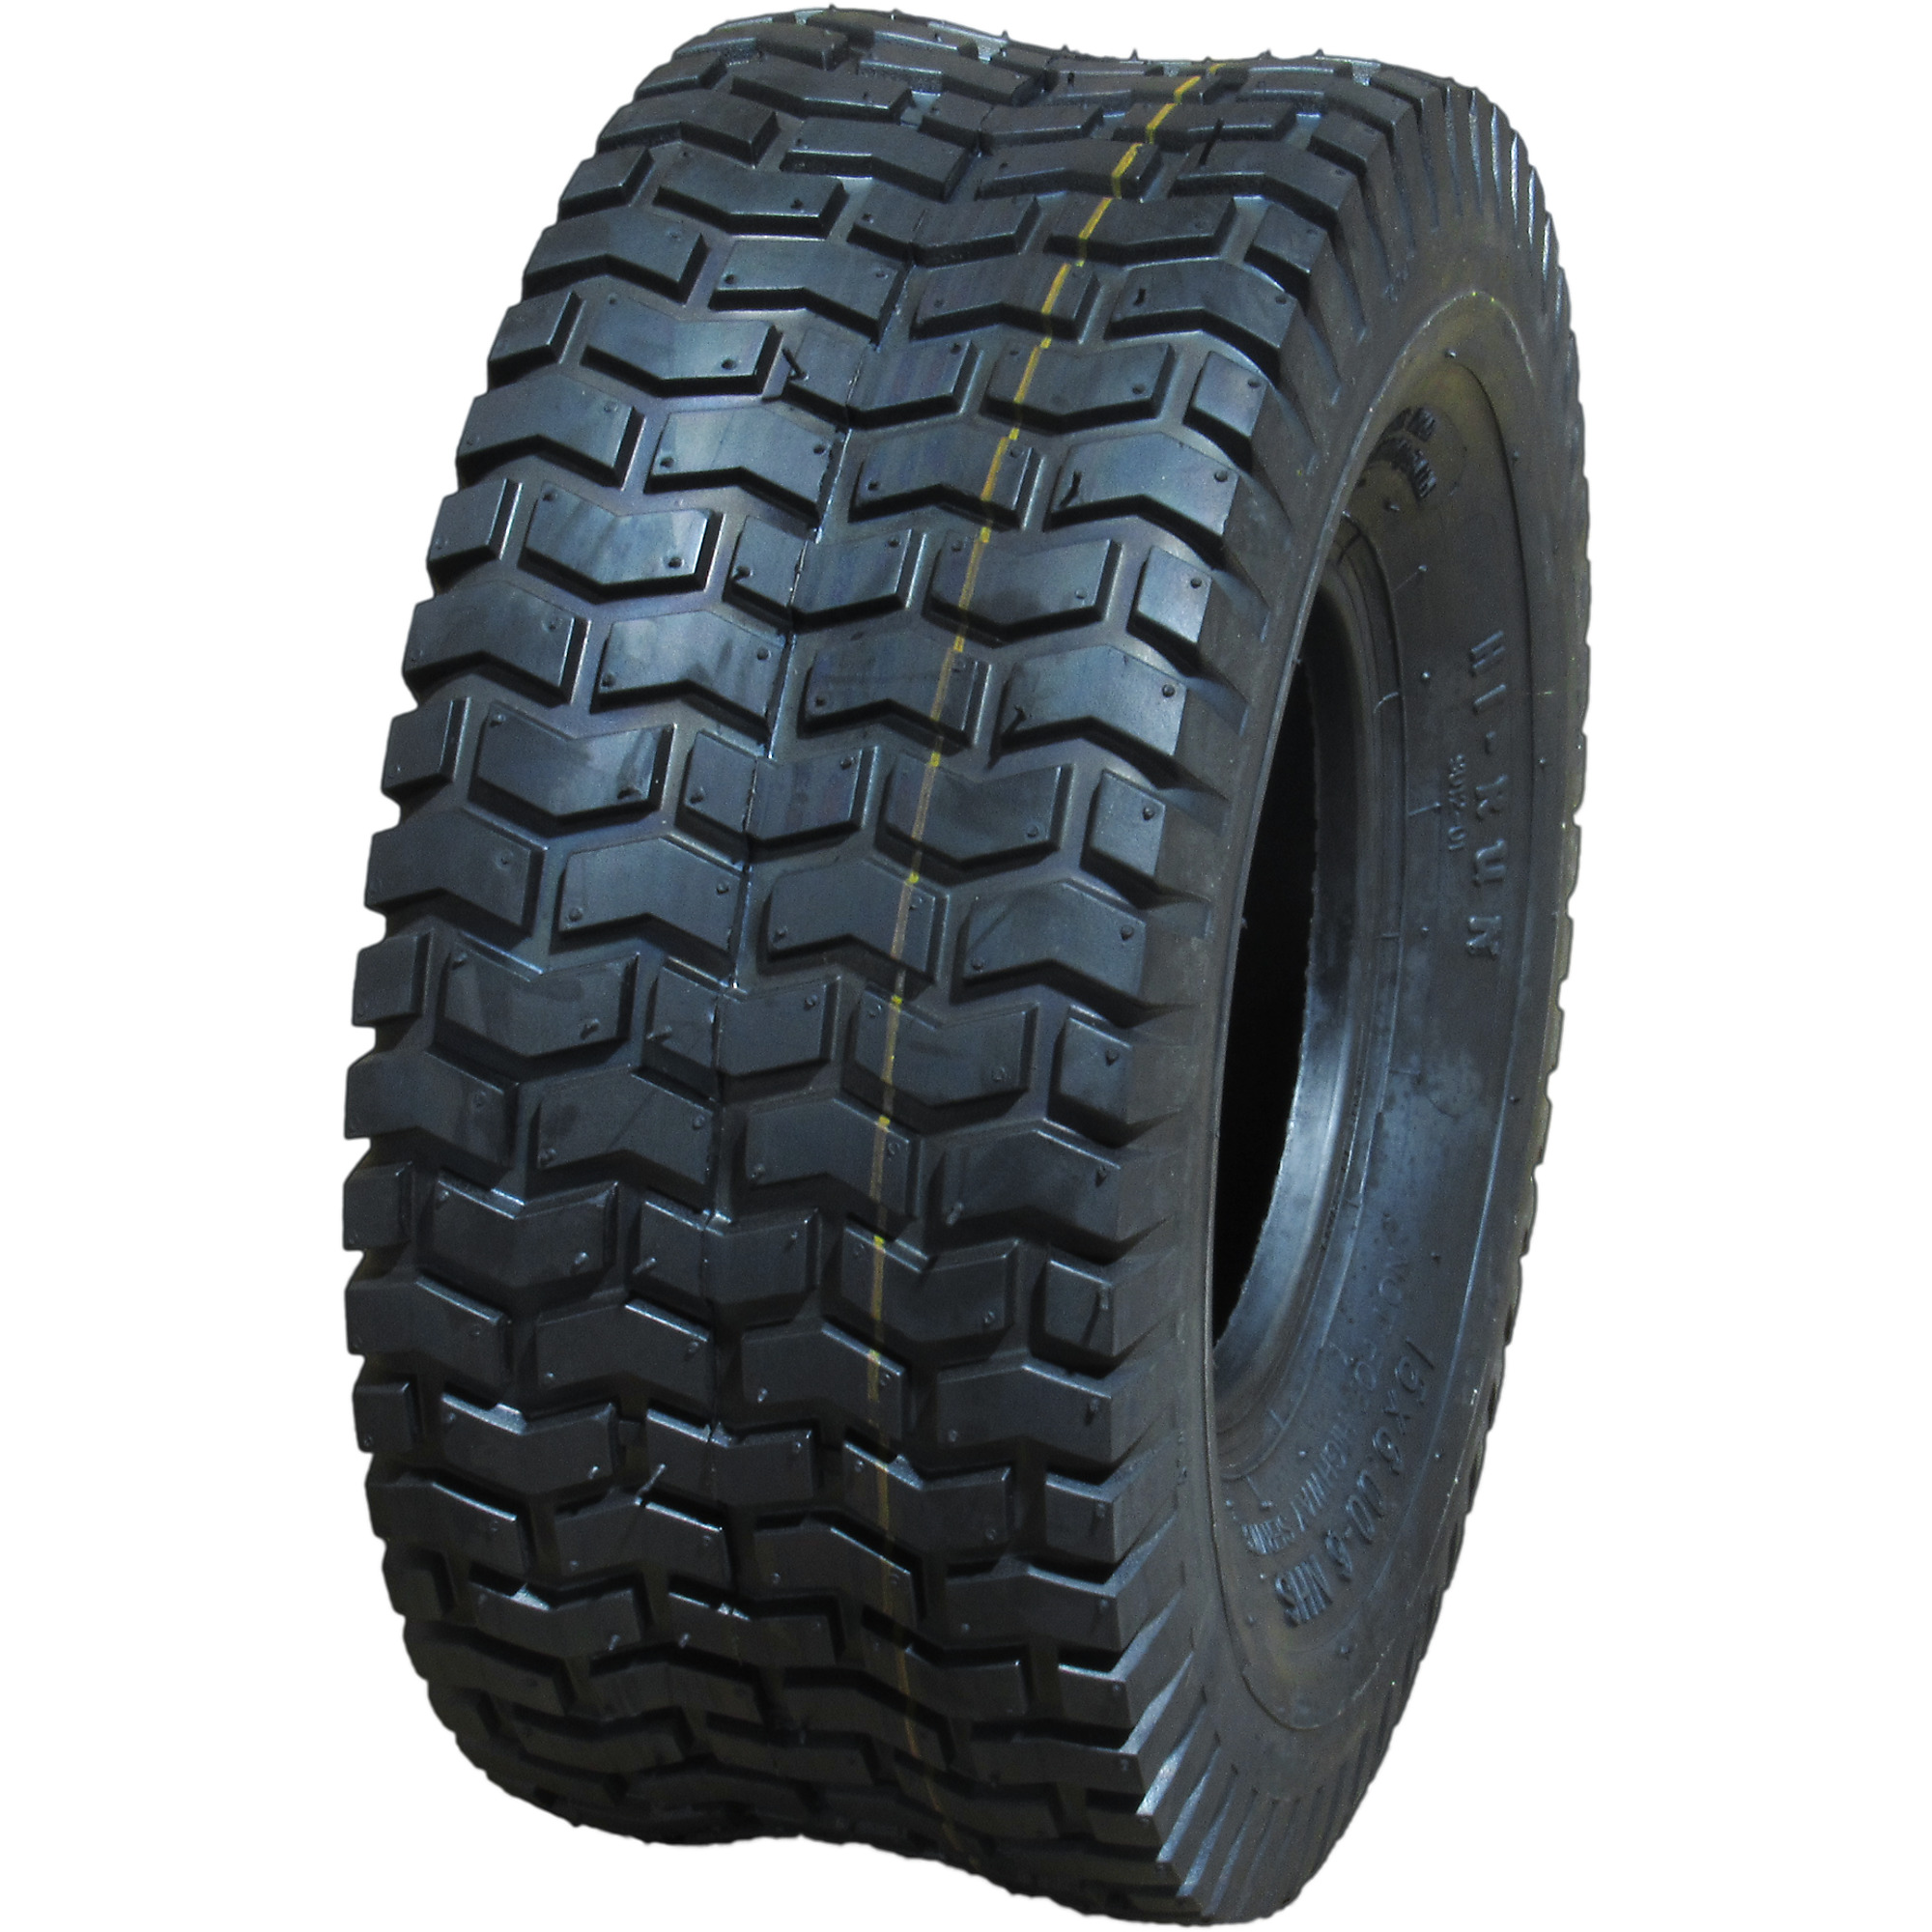 HI-RUN, Lawn Garden Tire, SU12 Turf II, Tire Size 16X7.50-8 Load Range Rating B, Model WD1186